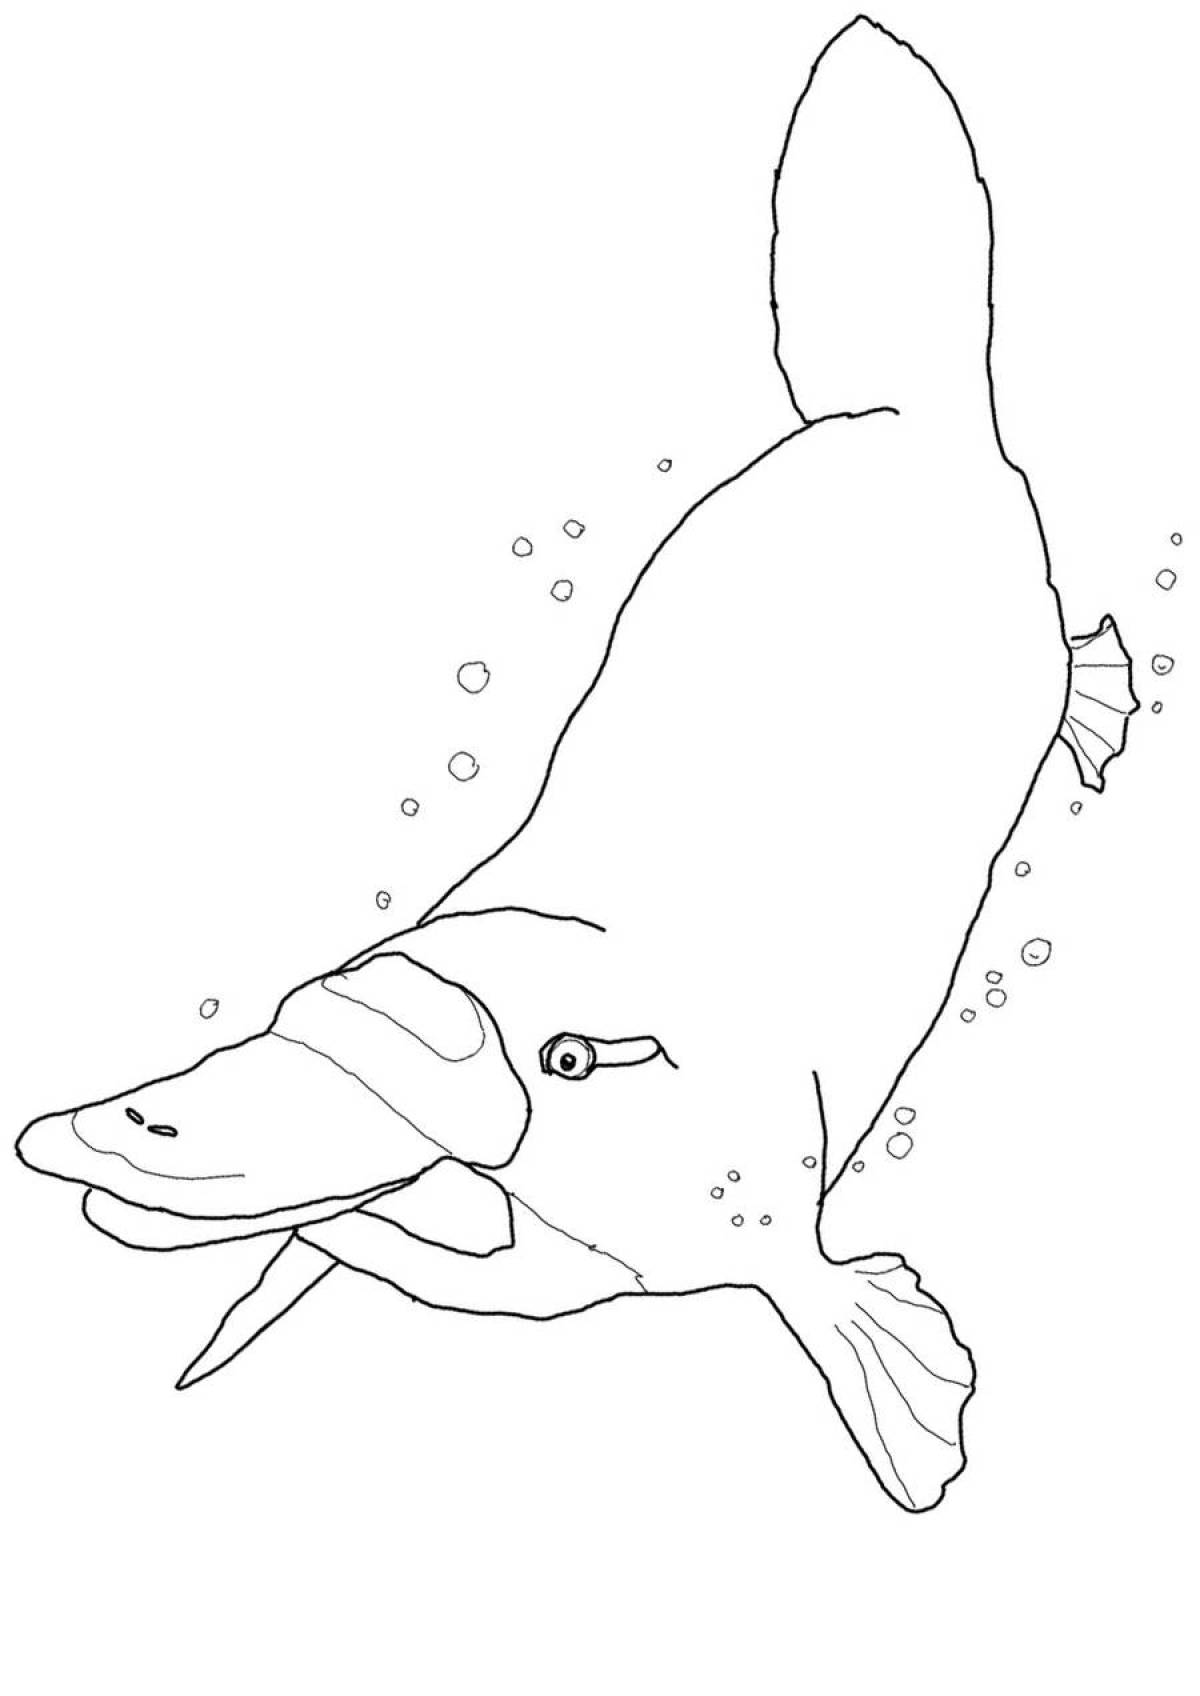 Animal platypus